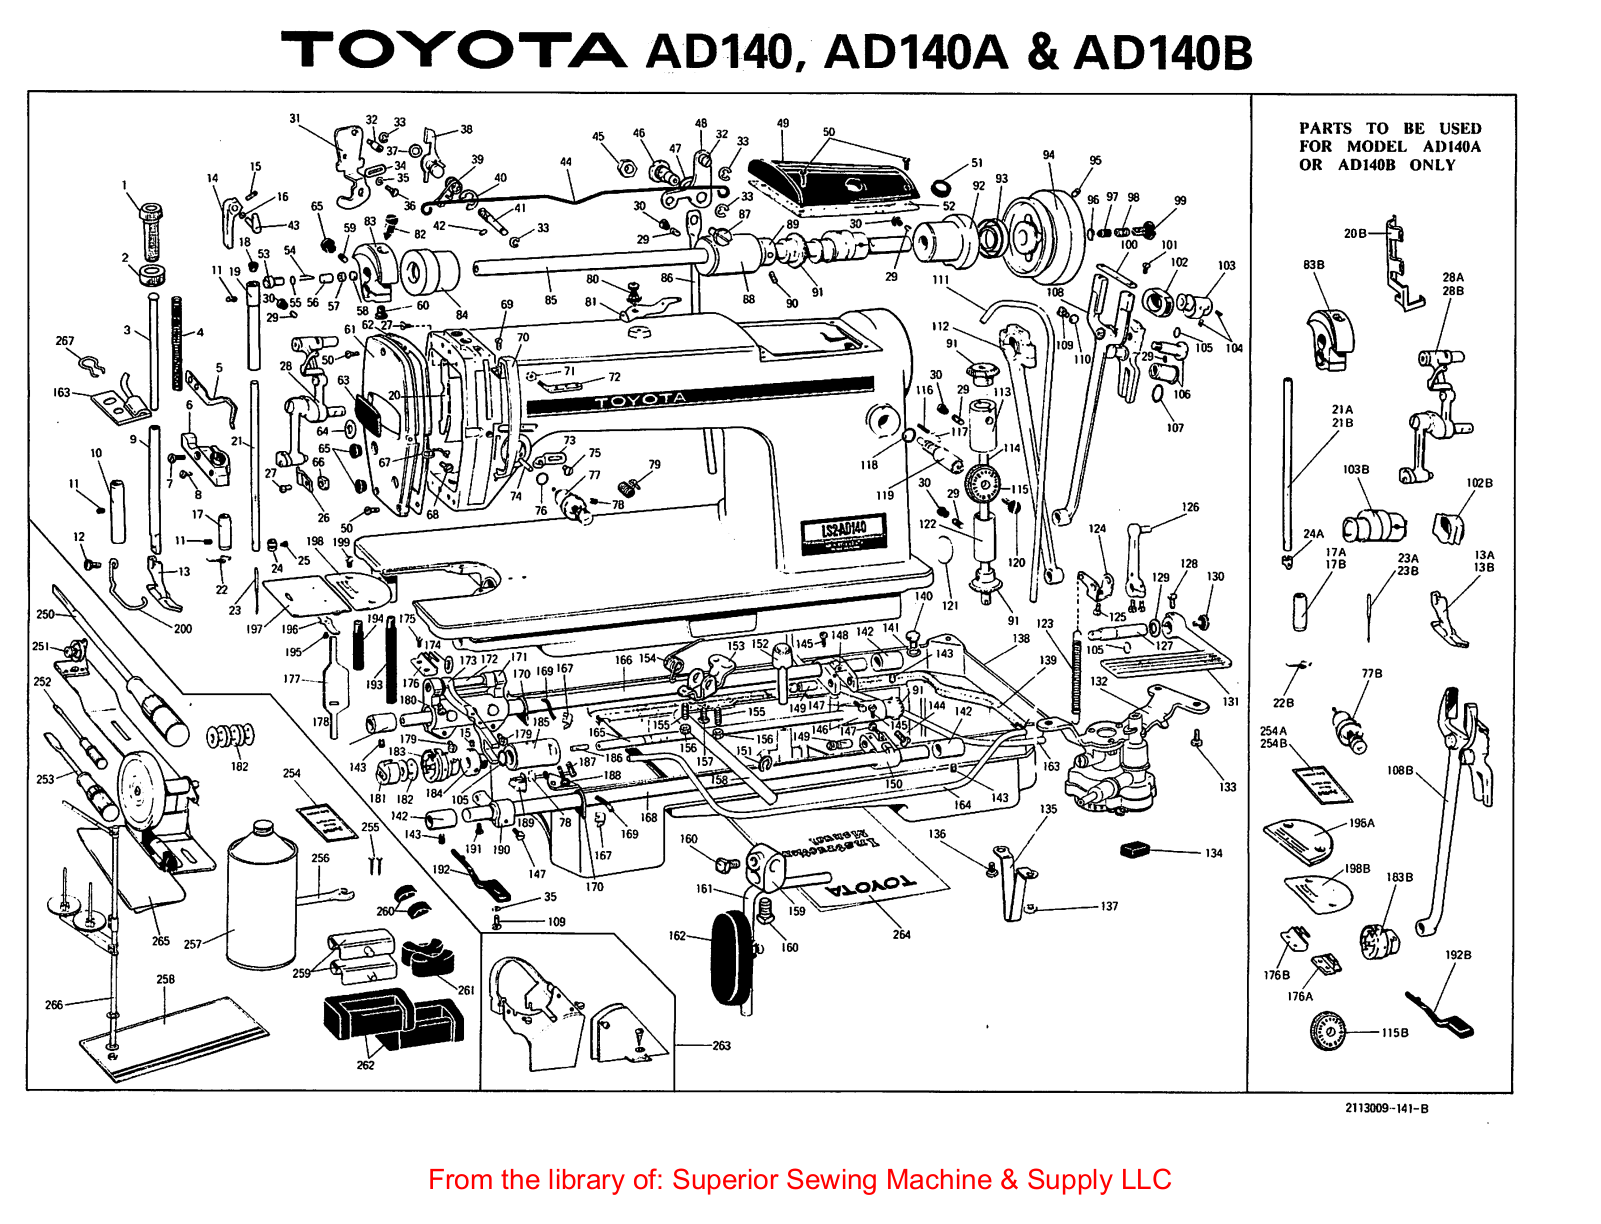 Toyota AD140, AD140A, AD140B Manual